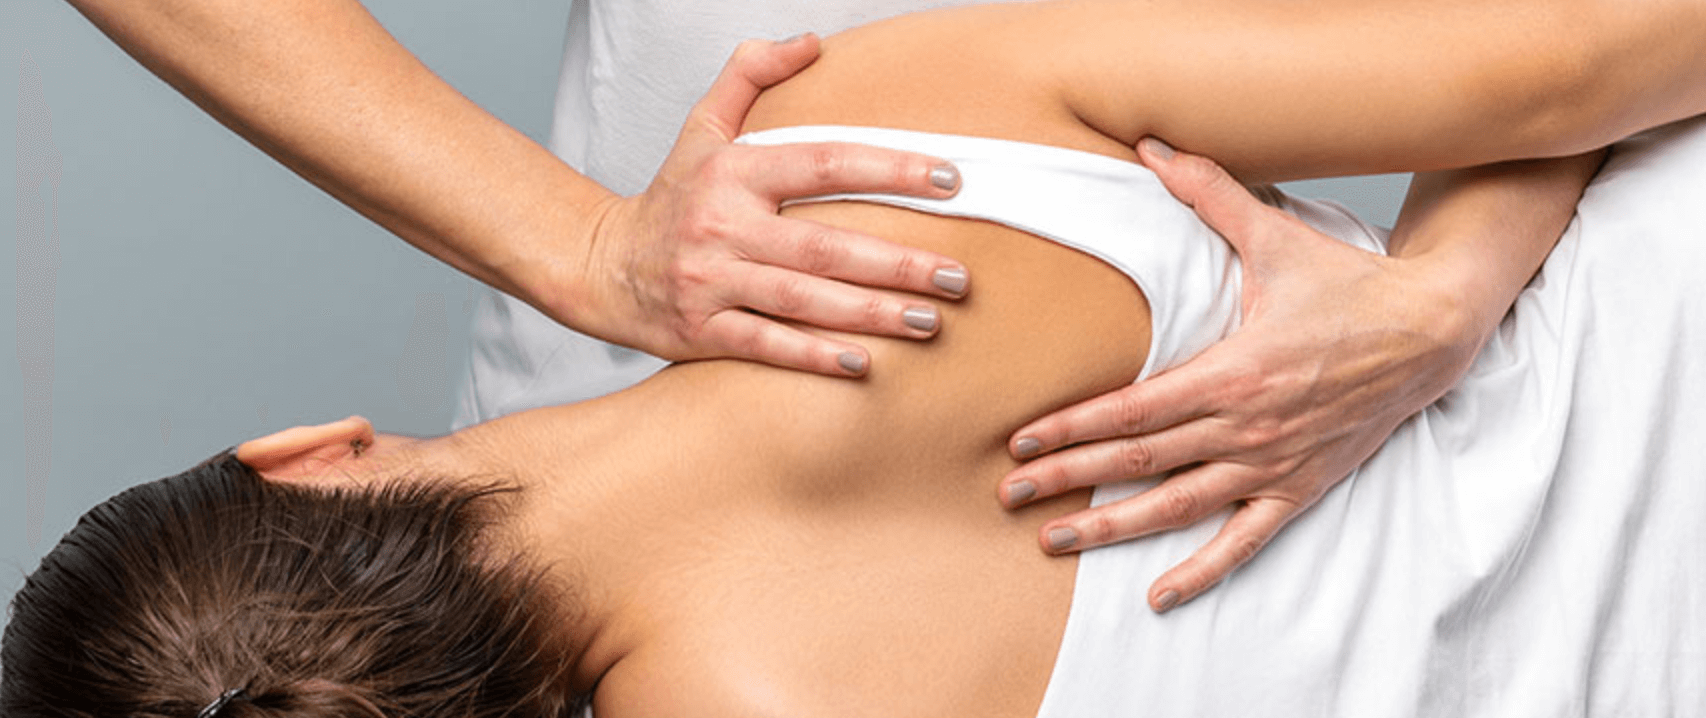 common-causes-shoulder-pain